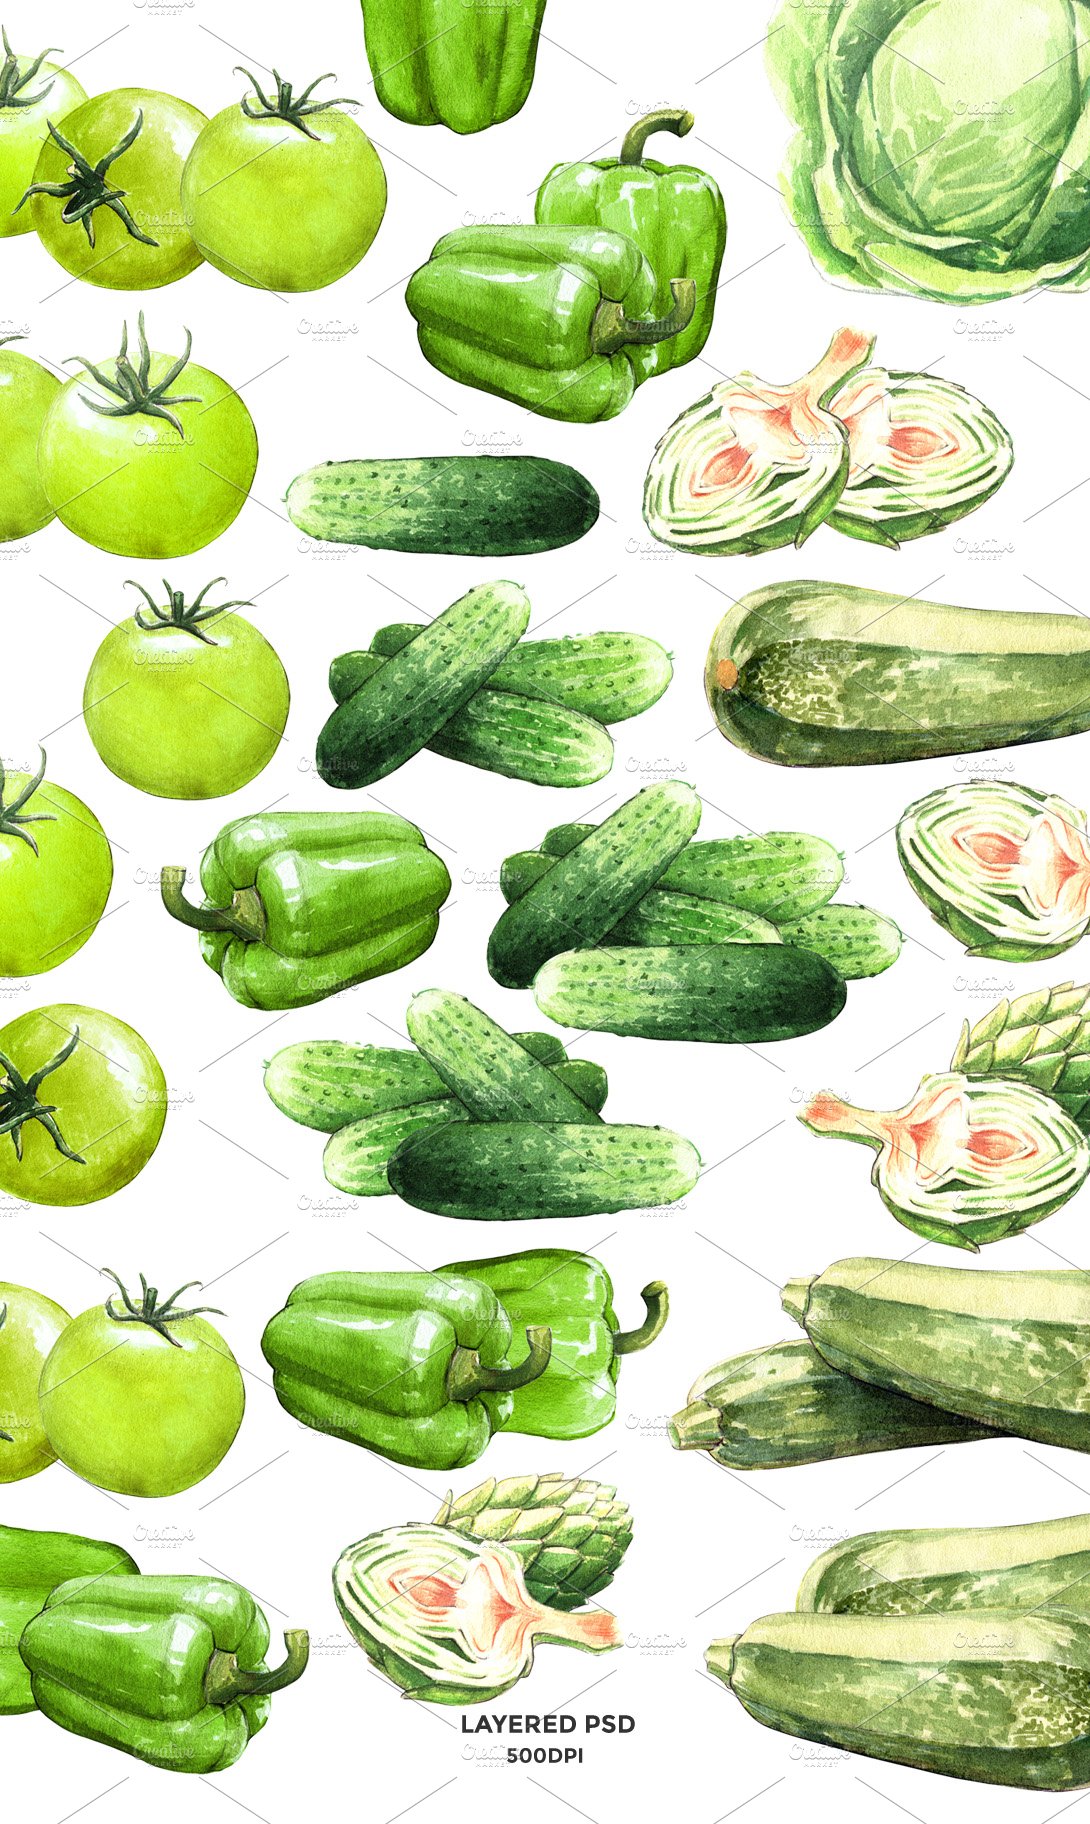 Green Vegetables watercolor big set preview image.